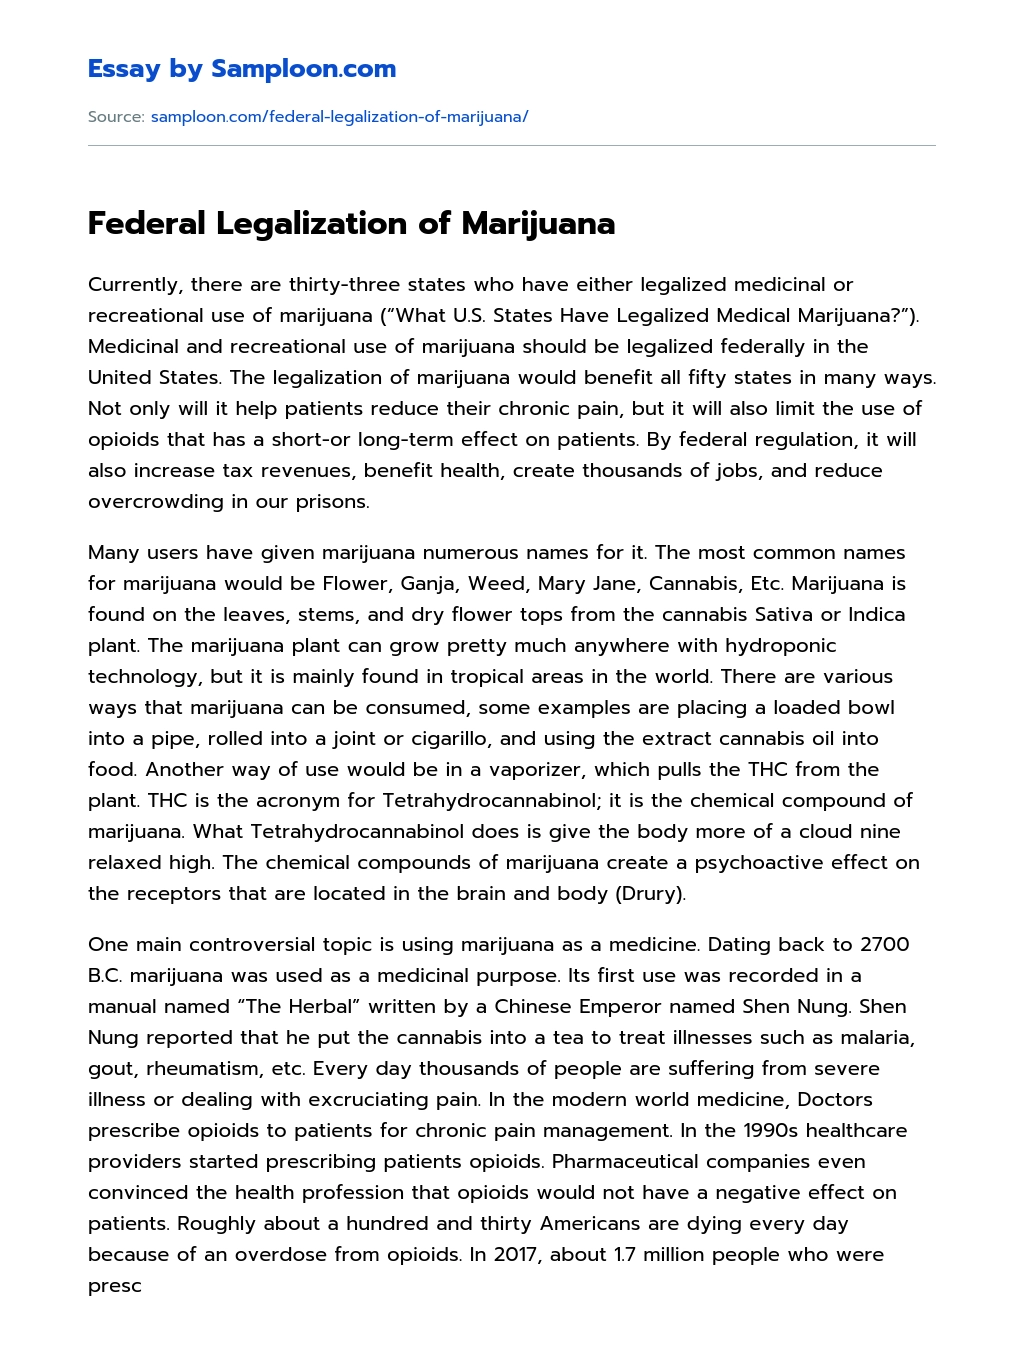 Federal Legalization of Marijuana essay